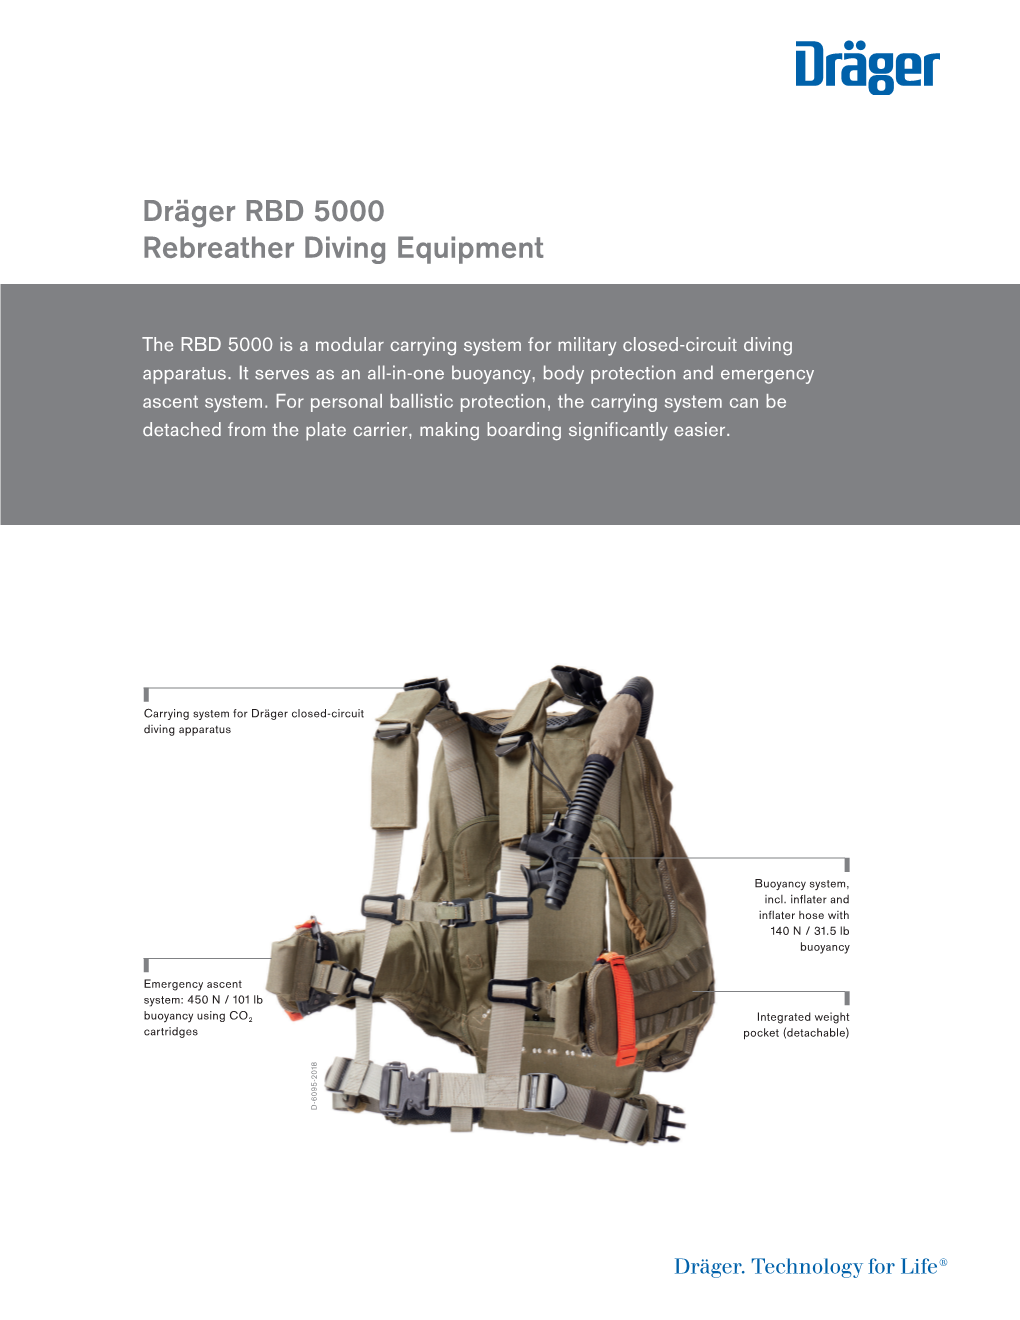 Dräger RBD 5000 Rebreather Diving Equipment